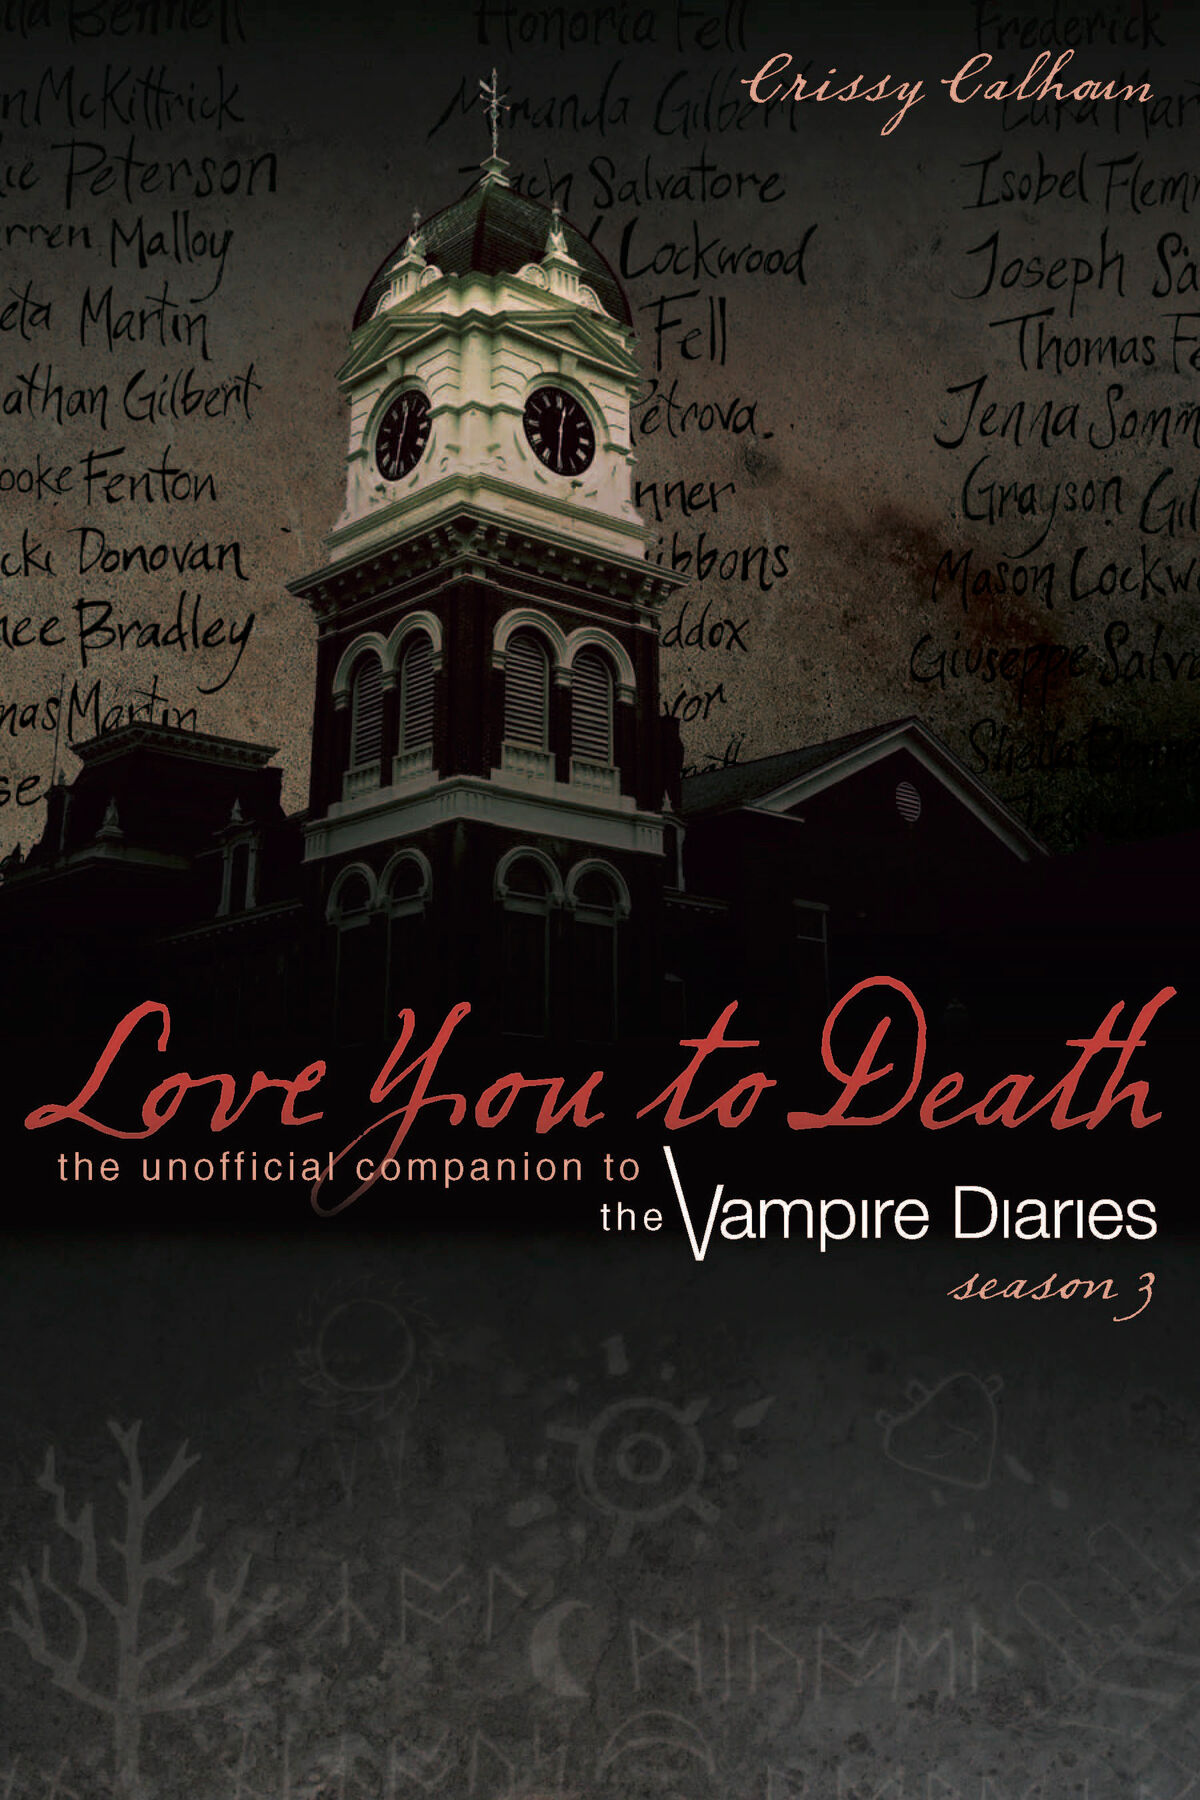 The Vampire Diaries Heart of Darkness (TV Episode 2012) - Matthew Davis as Alaric  Saltzman - IMDb